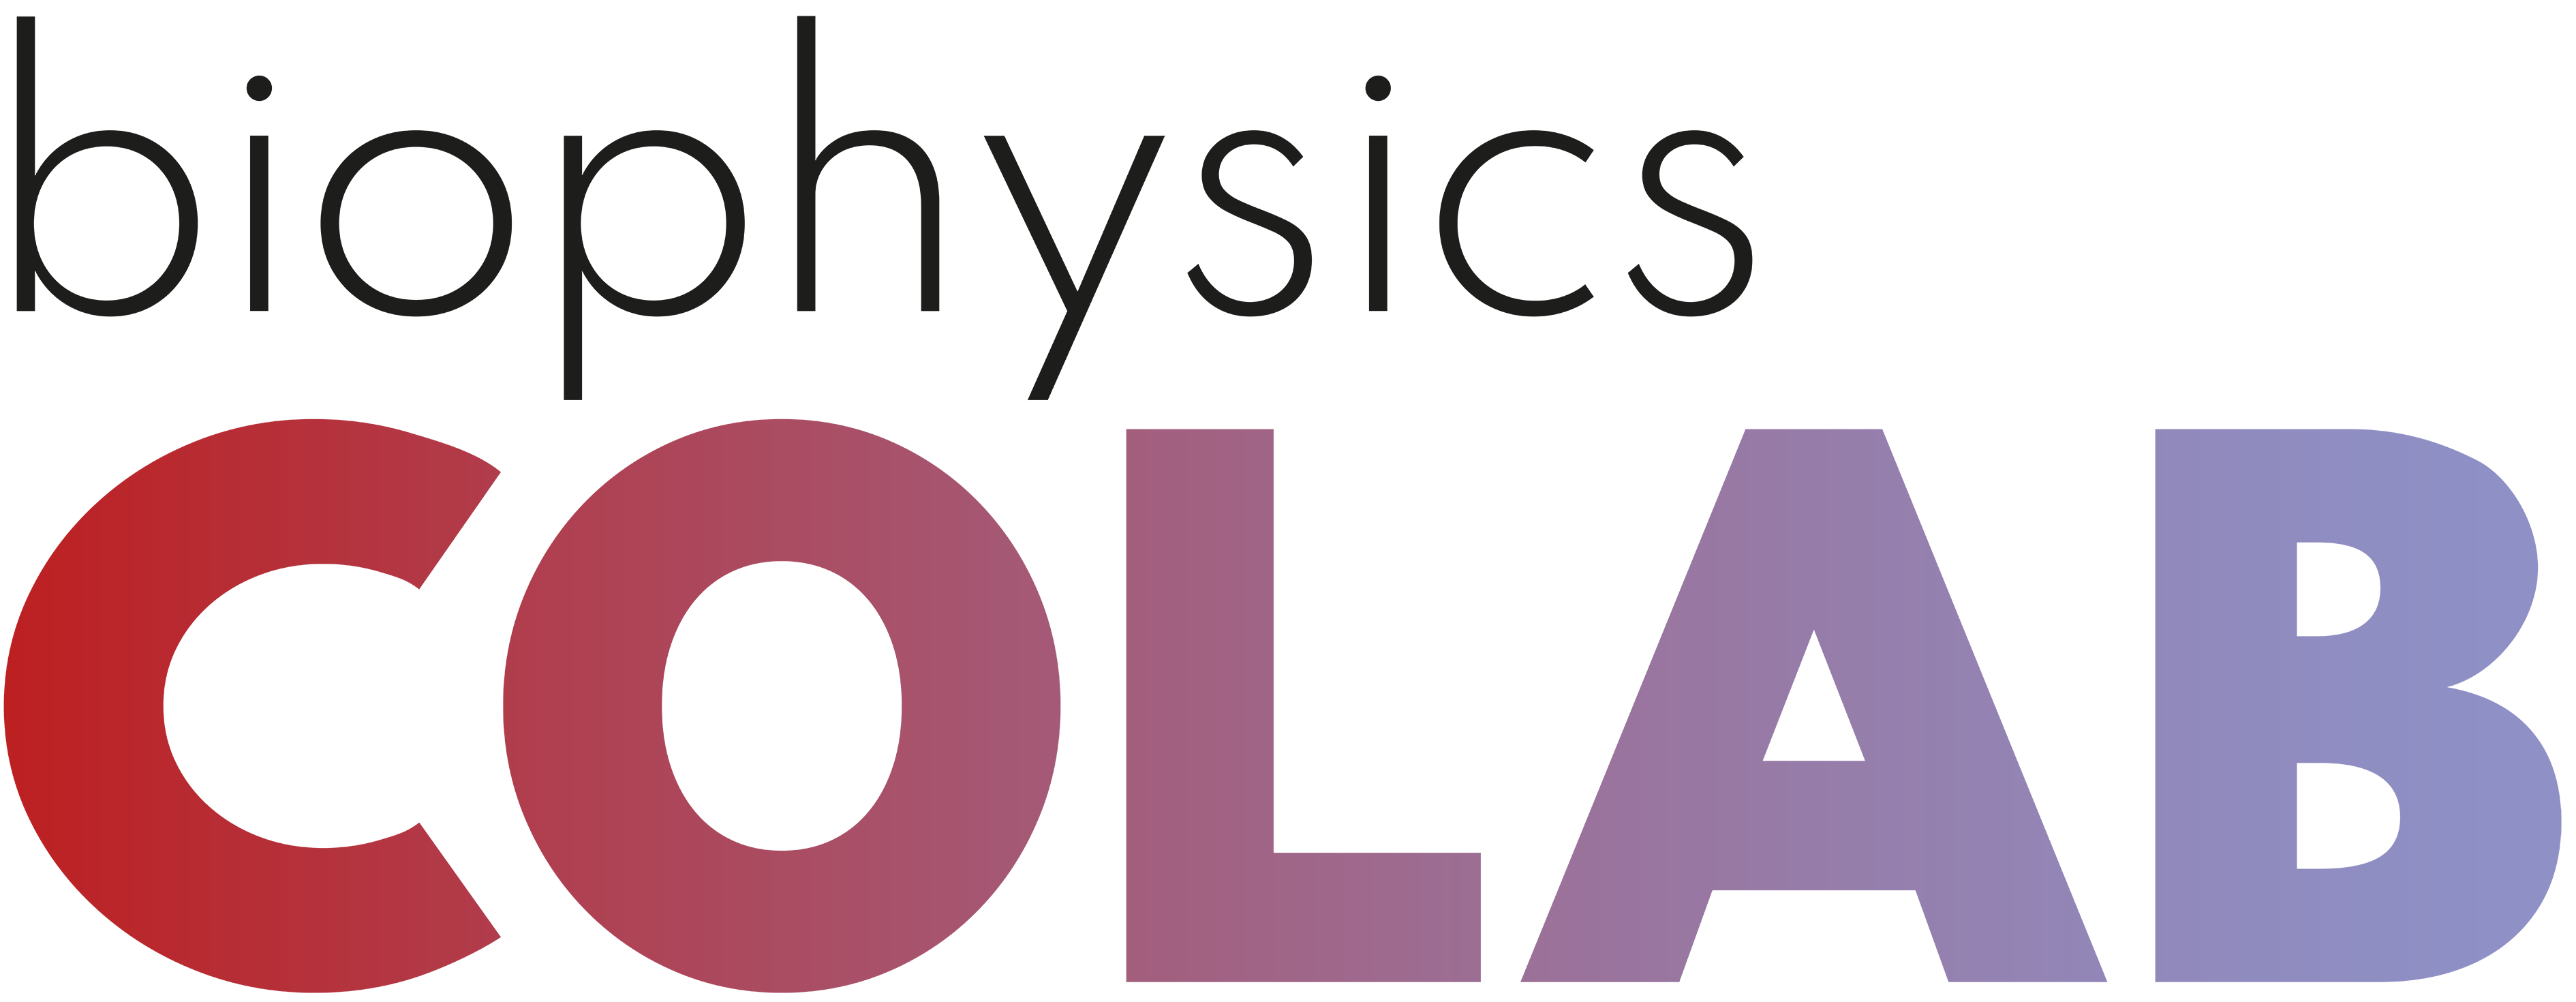 2021-11/210628_biophysics-logo_final_large.png